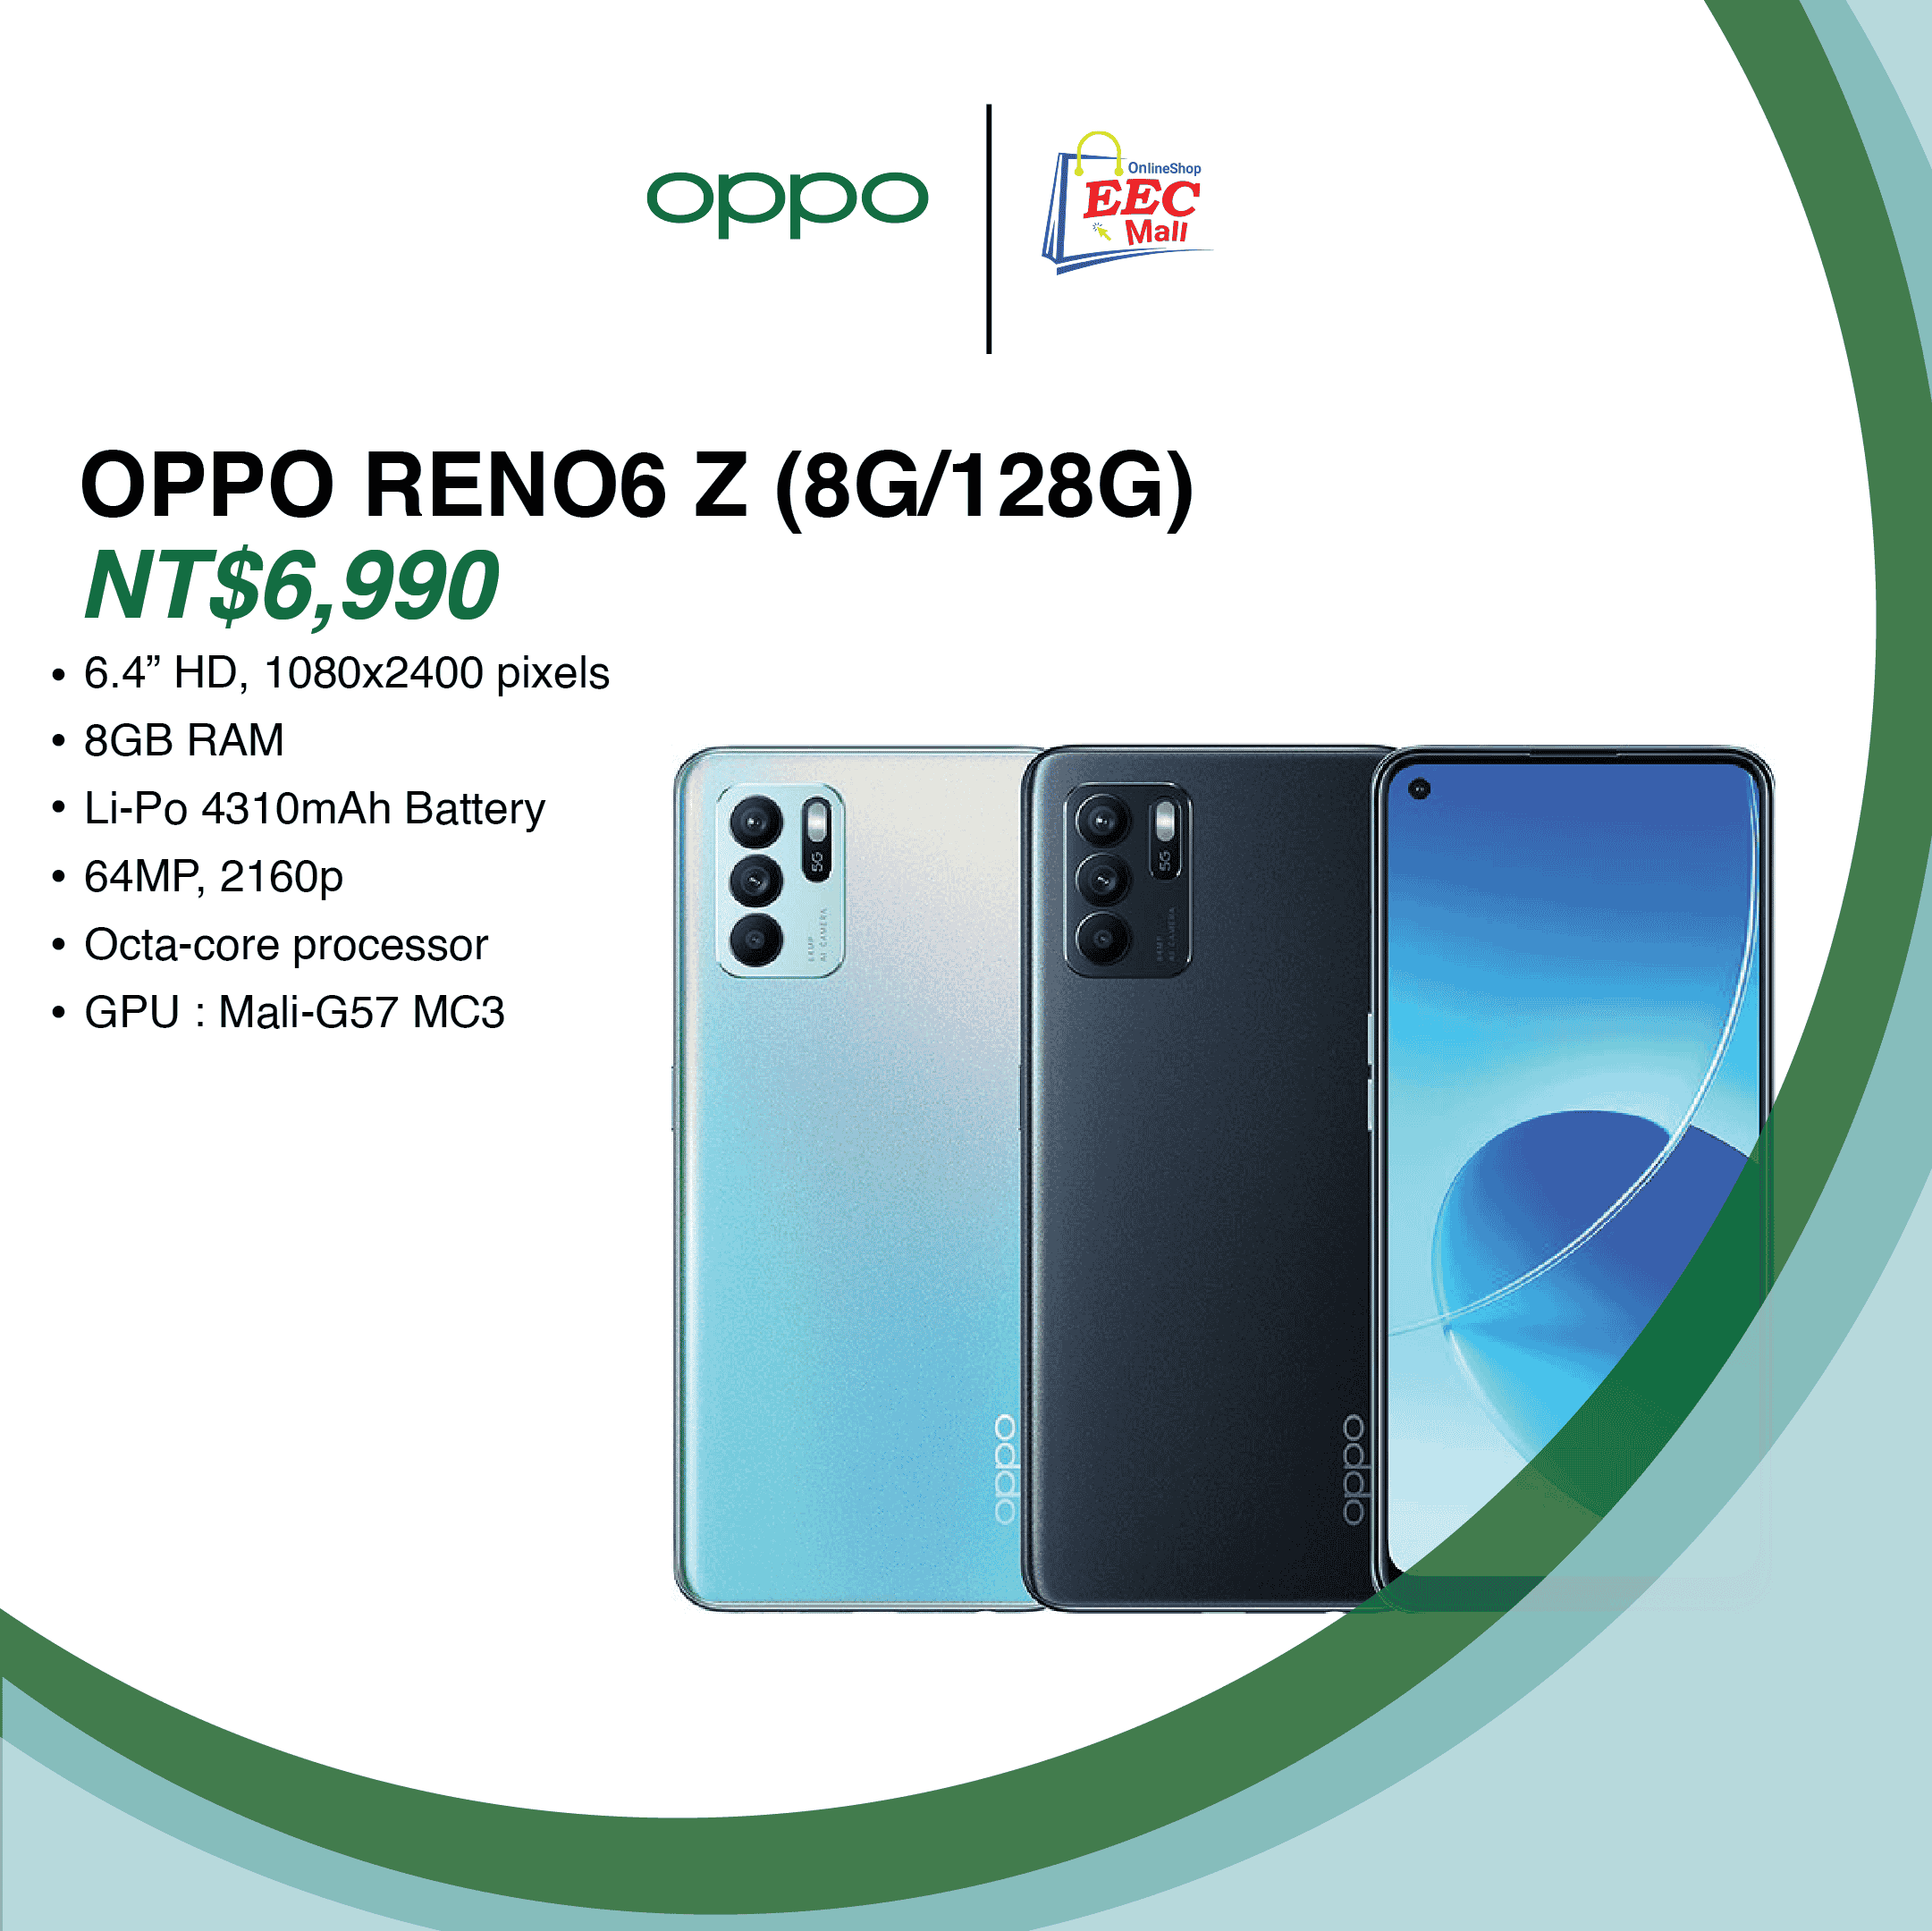 OPPO RENO6 Z (8G/128G)